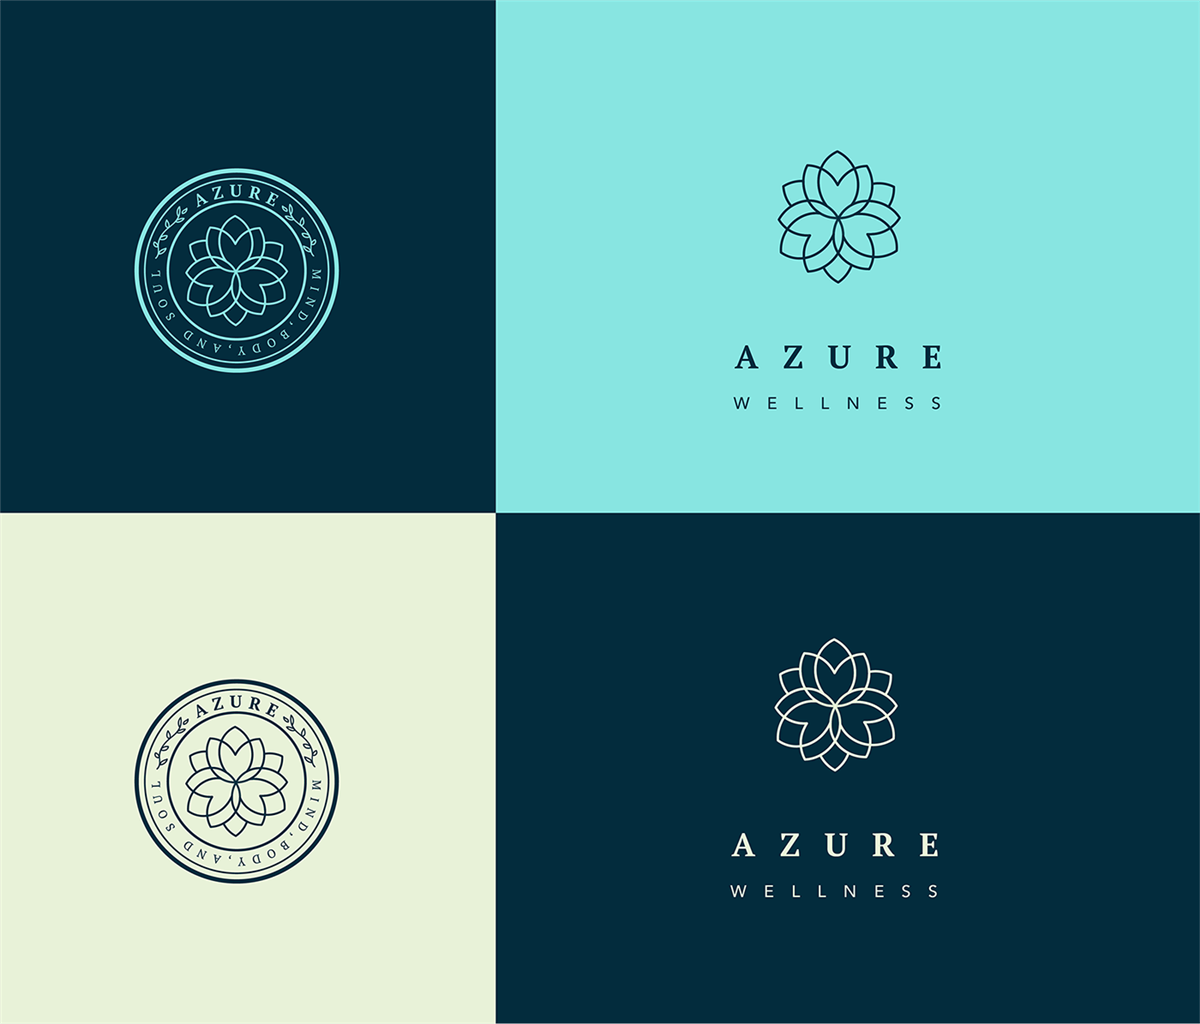 Azure瑜伽工作室品牌标识